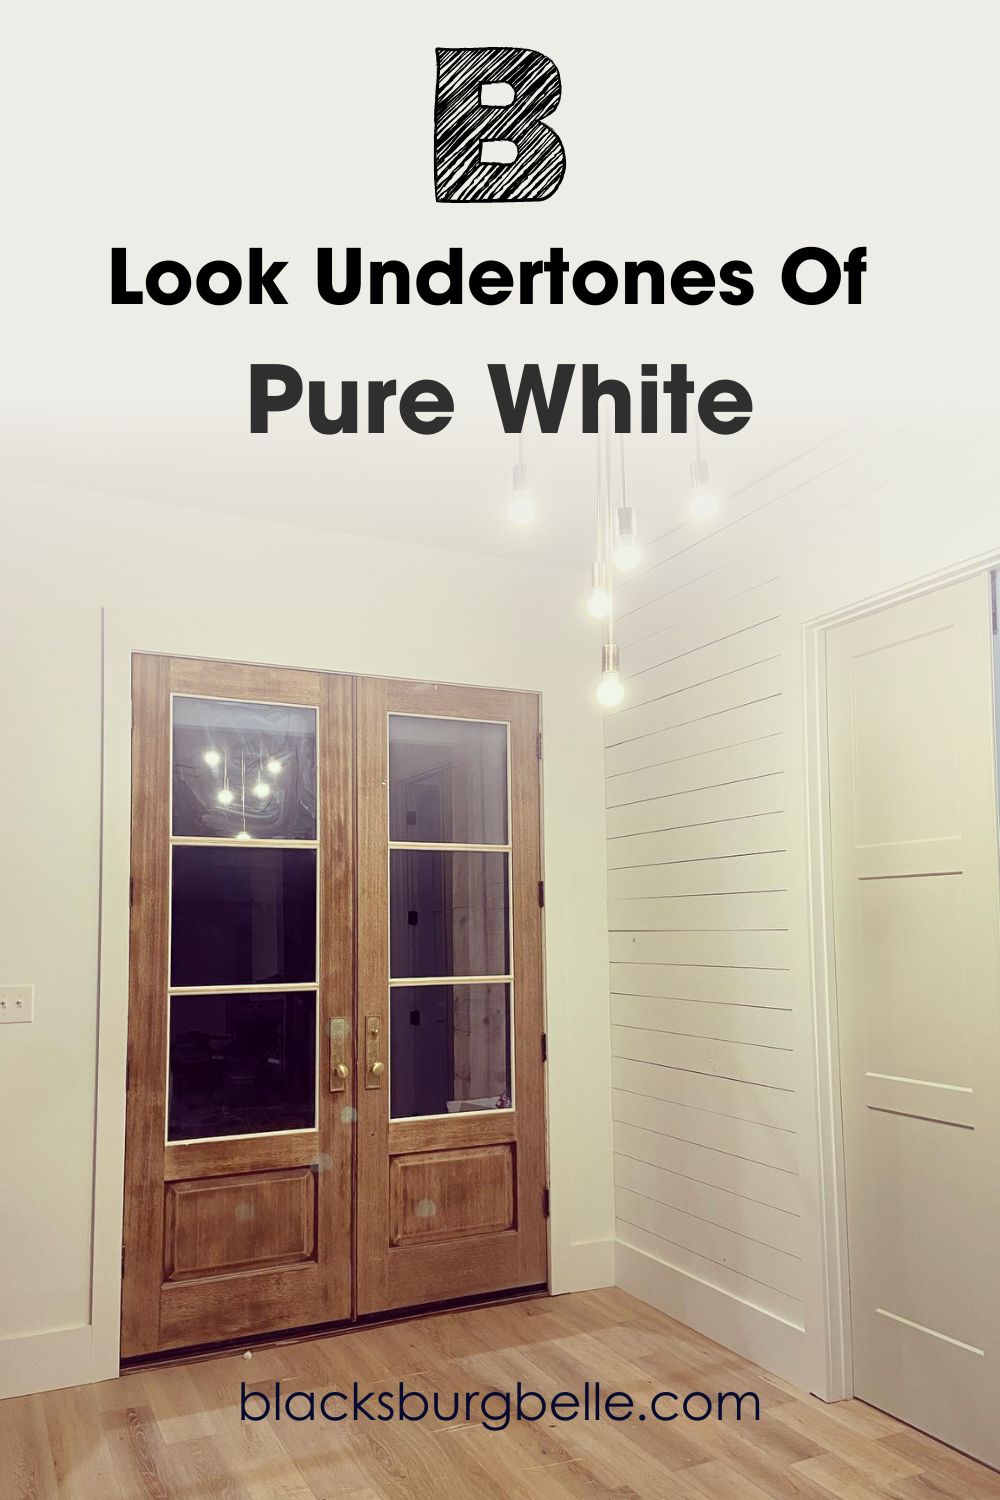 Look Undertones Of Pure White